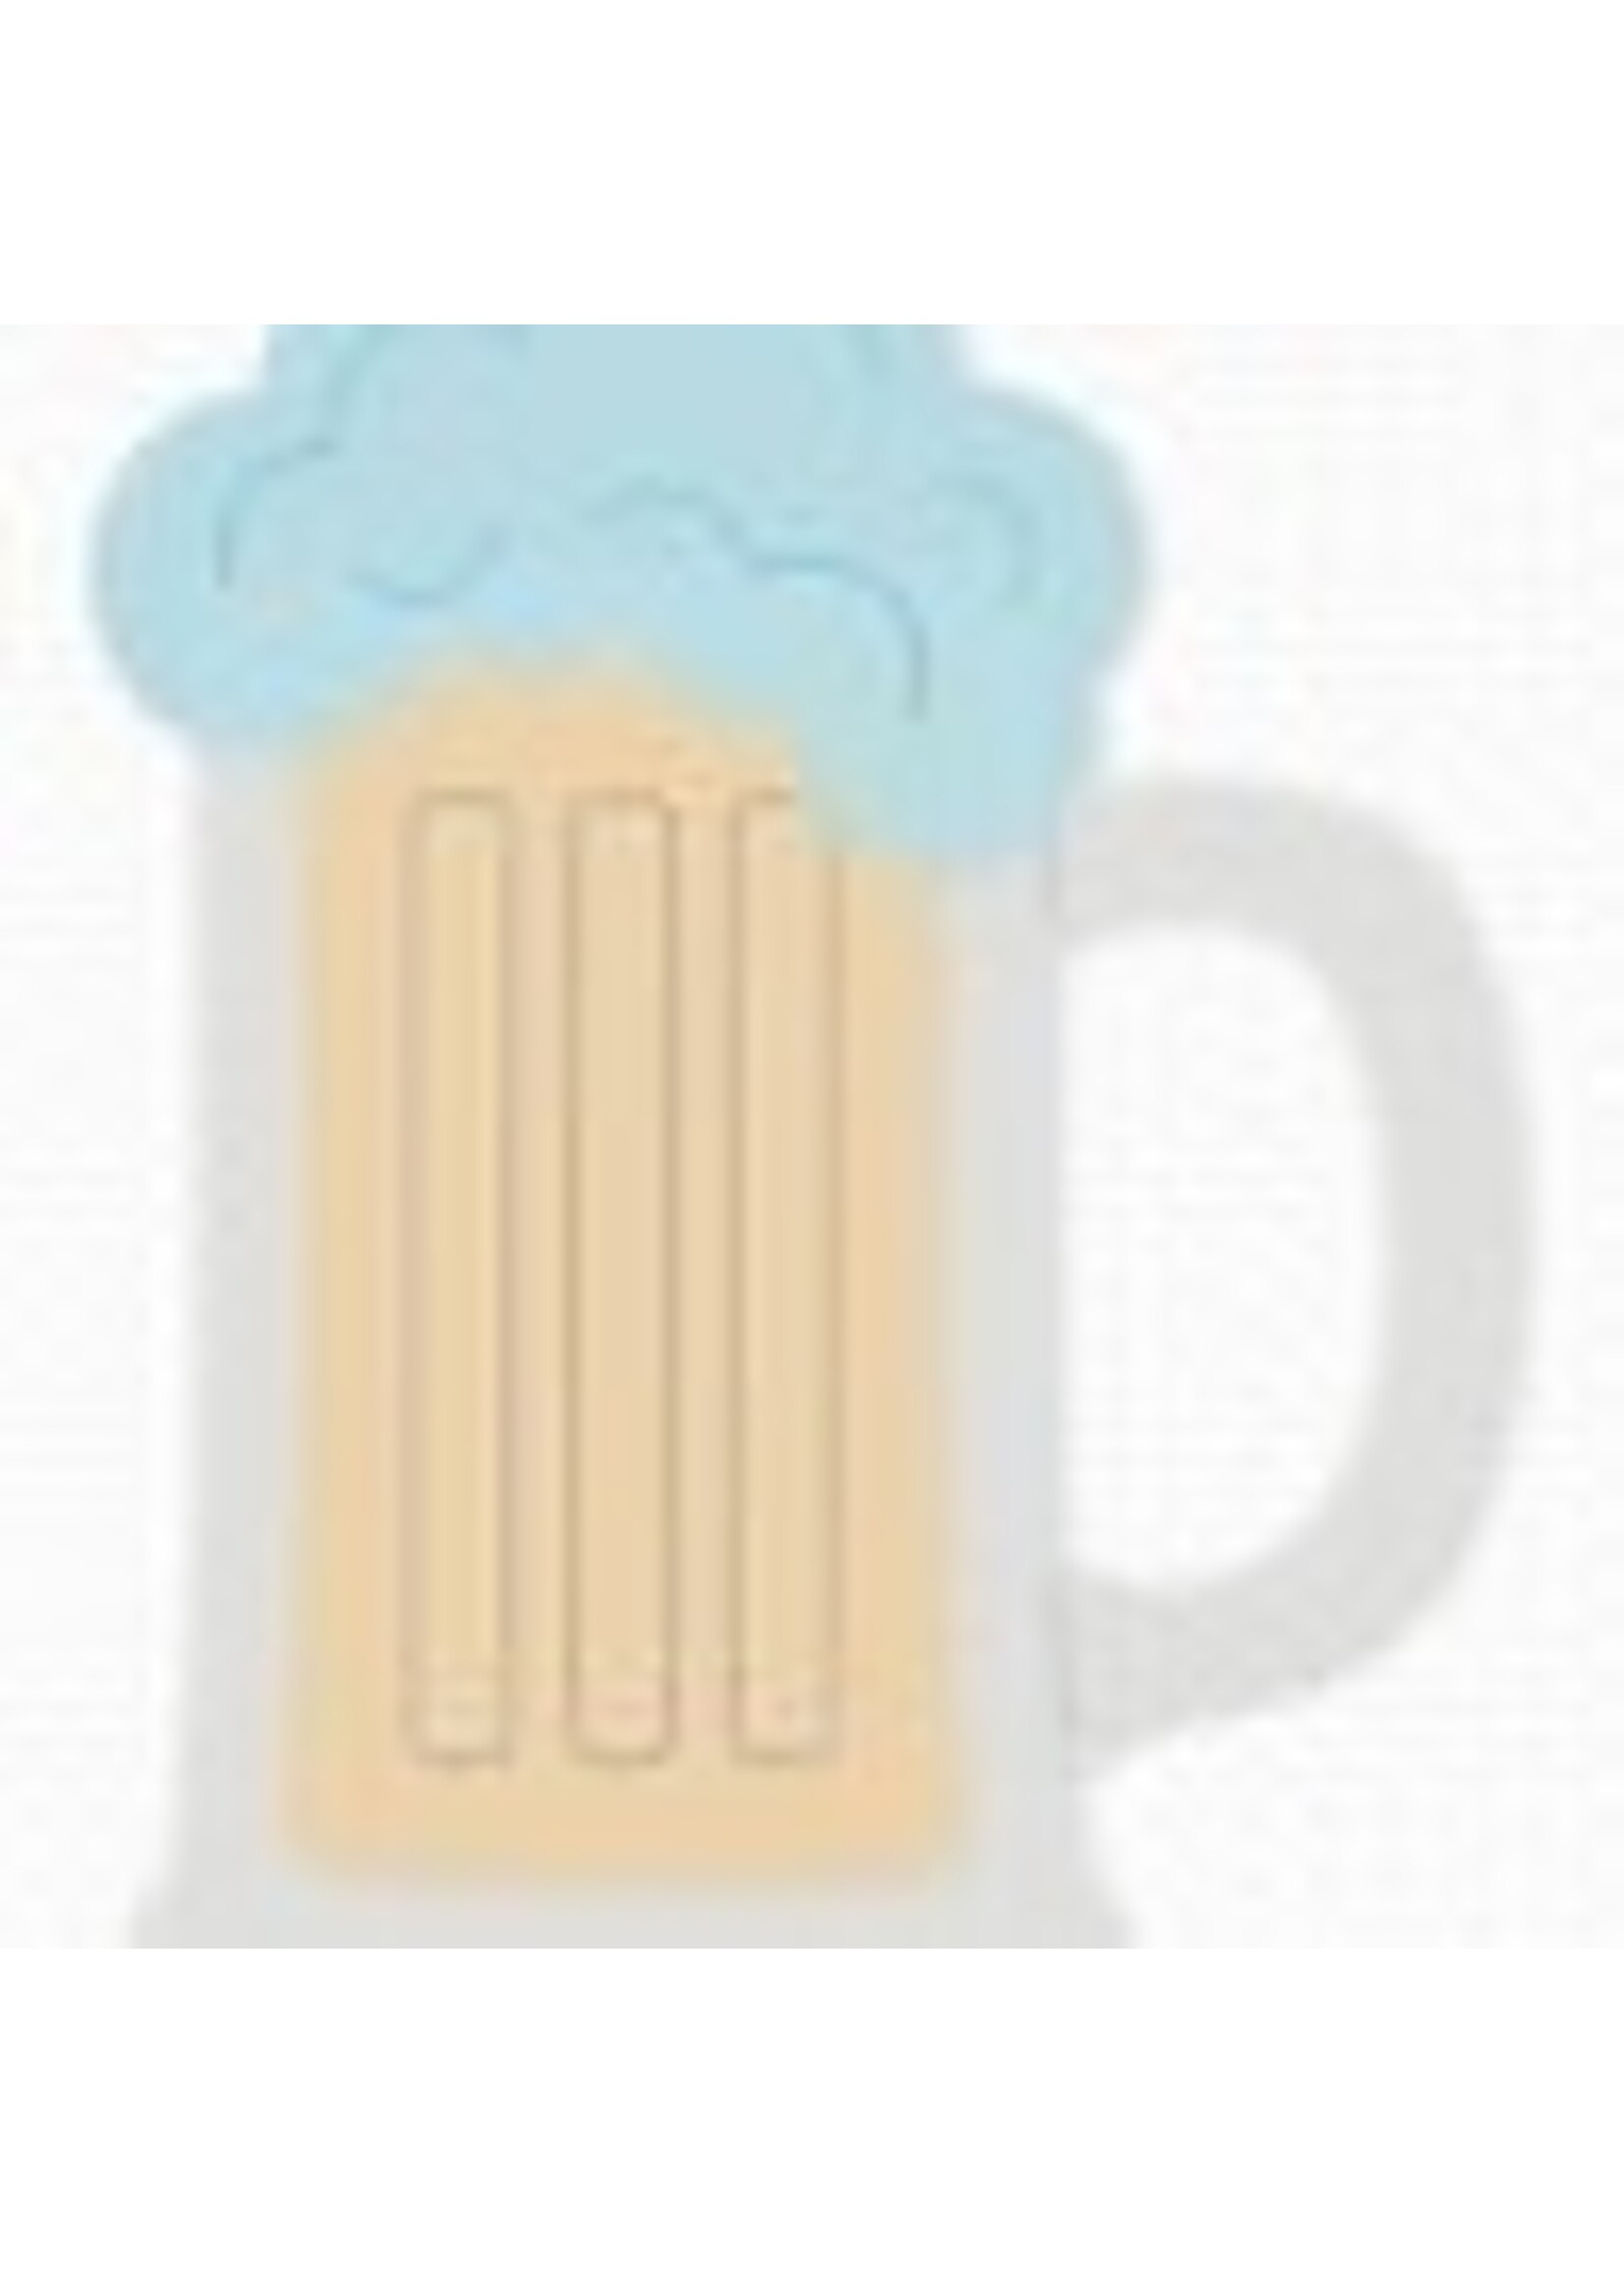 MFT Frosty Beer Mug Die-namics (MFT-2231)